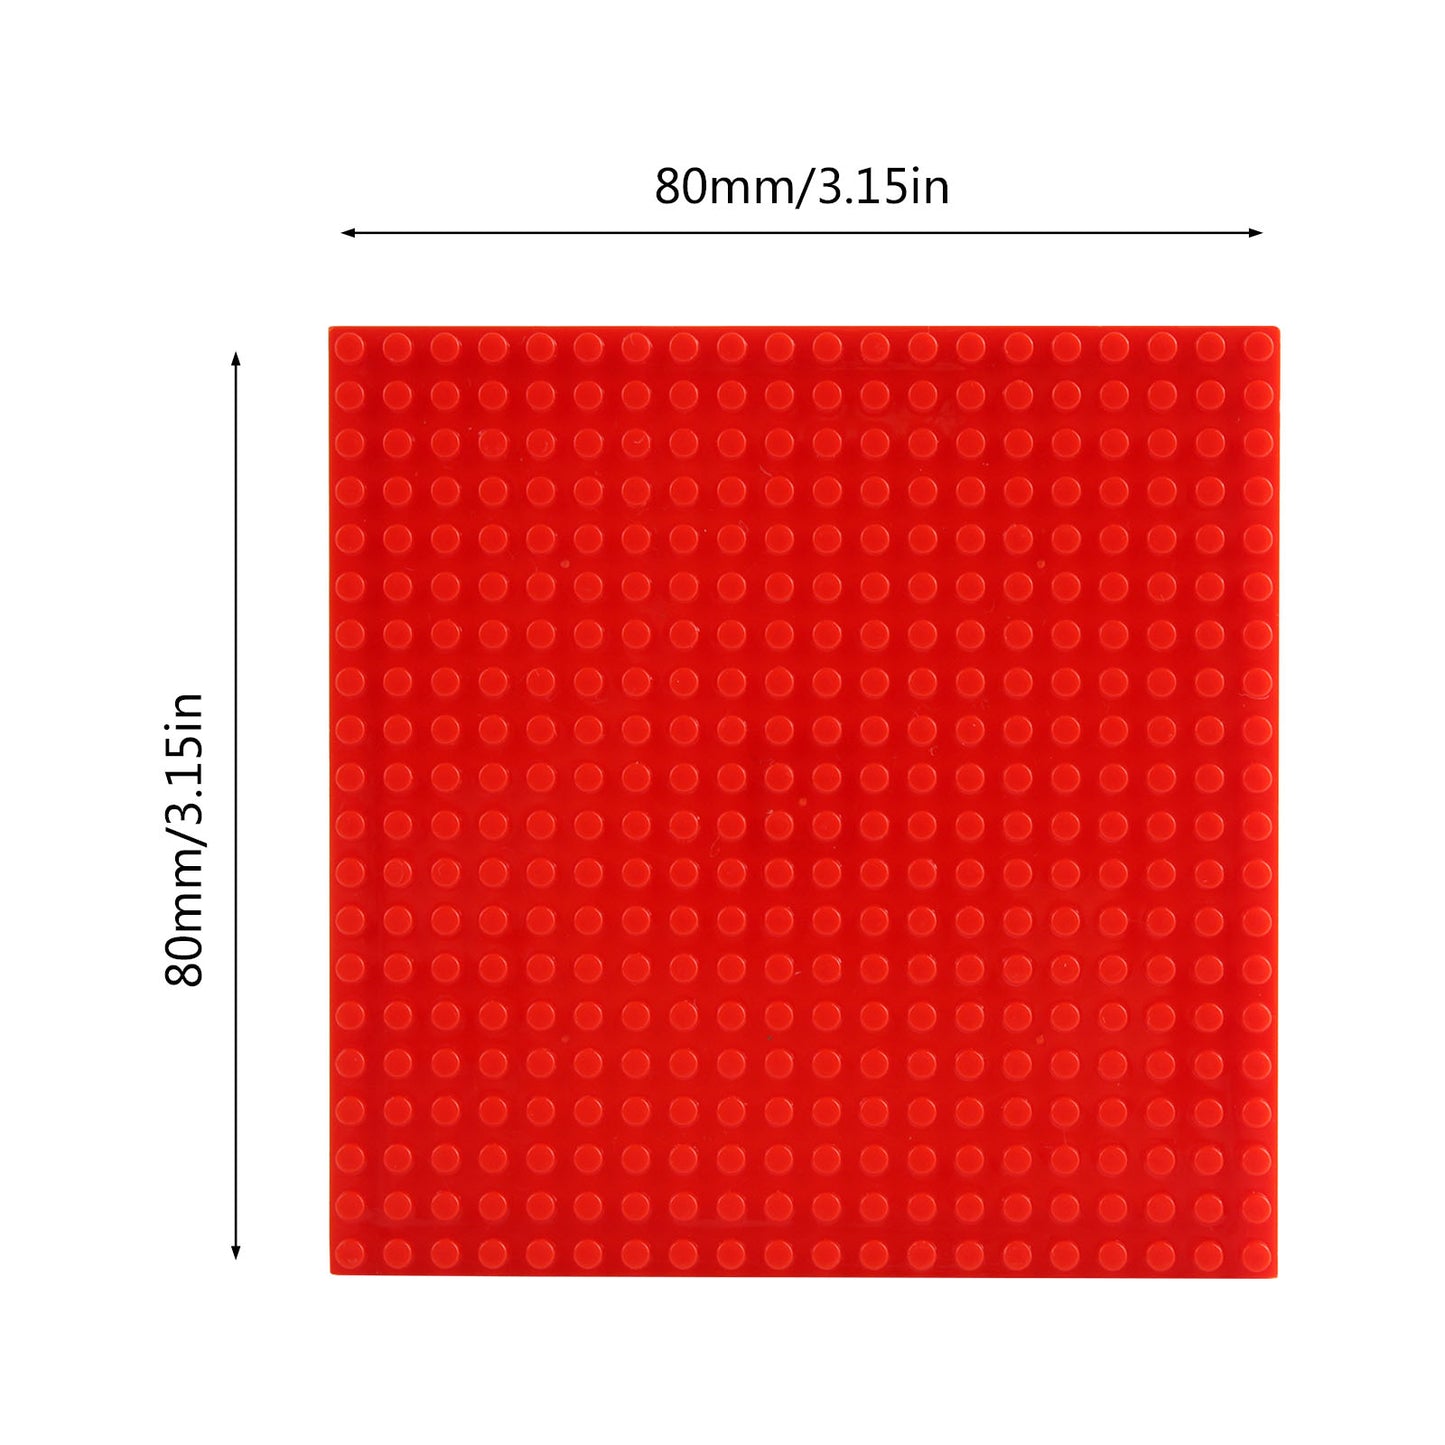 Larcele 10 Pieces Mini Building Blocks Base Plates JMDB-02 (Square,Red)